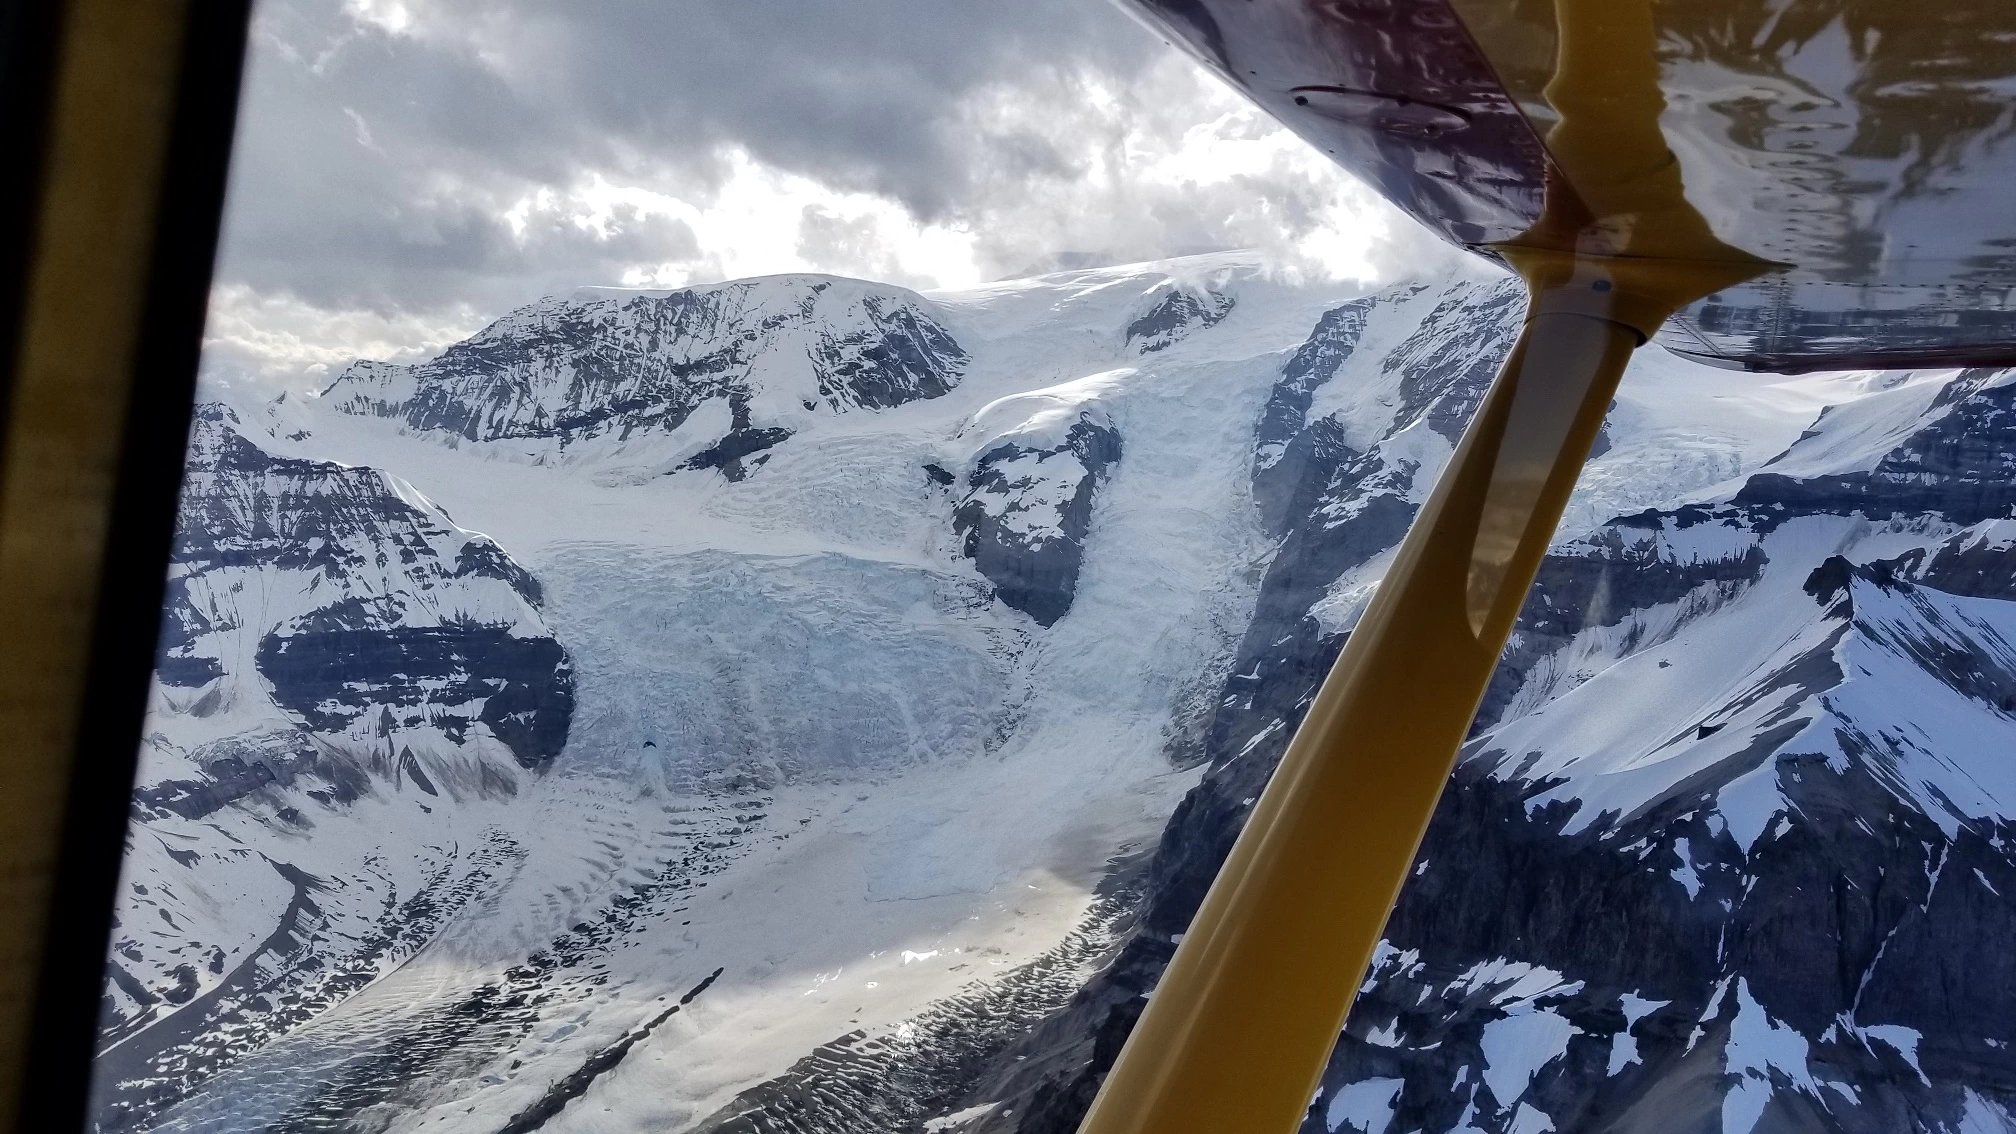 Wrangell and St. Elias Mountains views from Alaskan bush plane